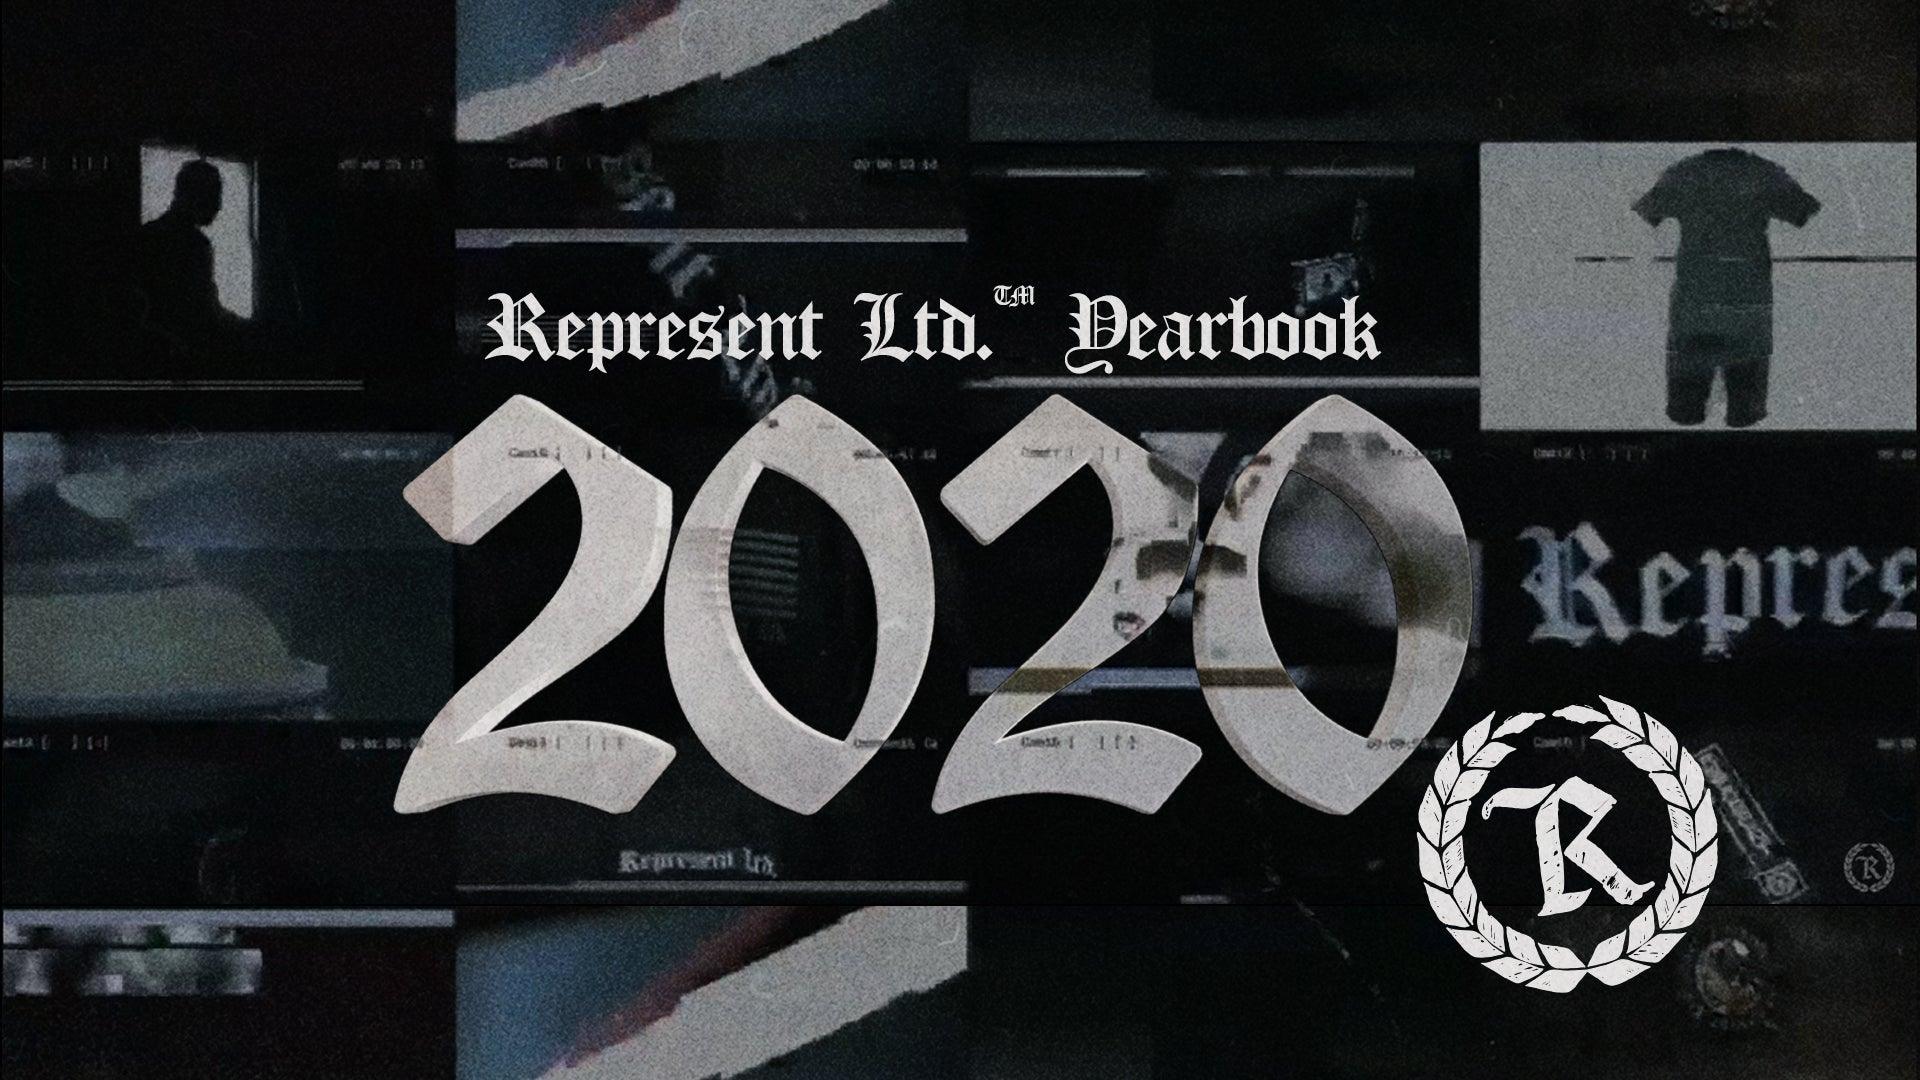 Represent Ltd.™ The Annual 2020 Yearbook - Represent Ltd.™